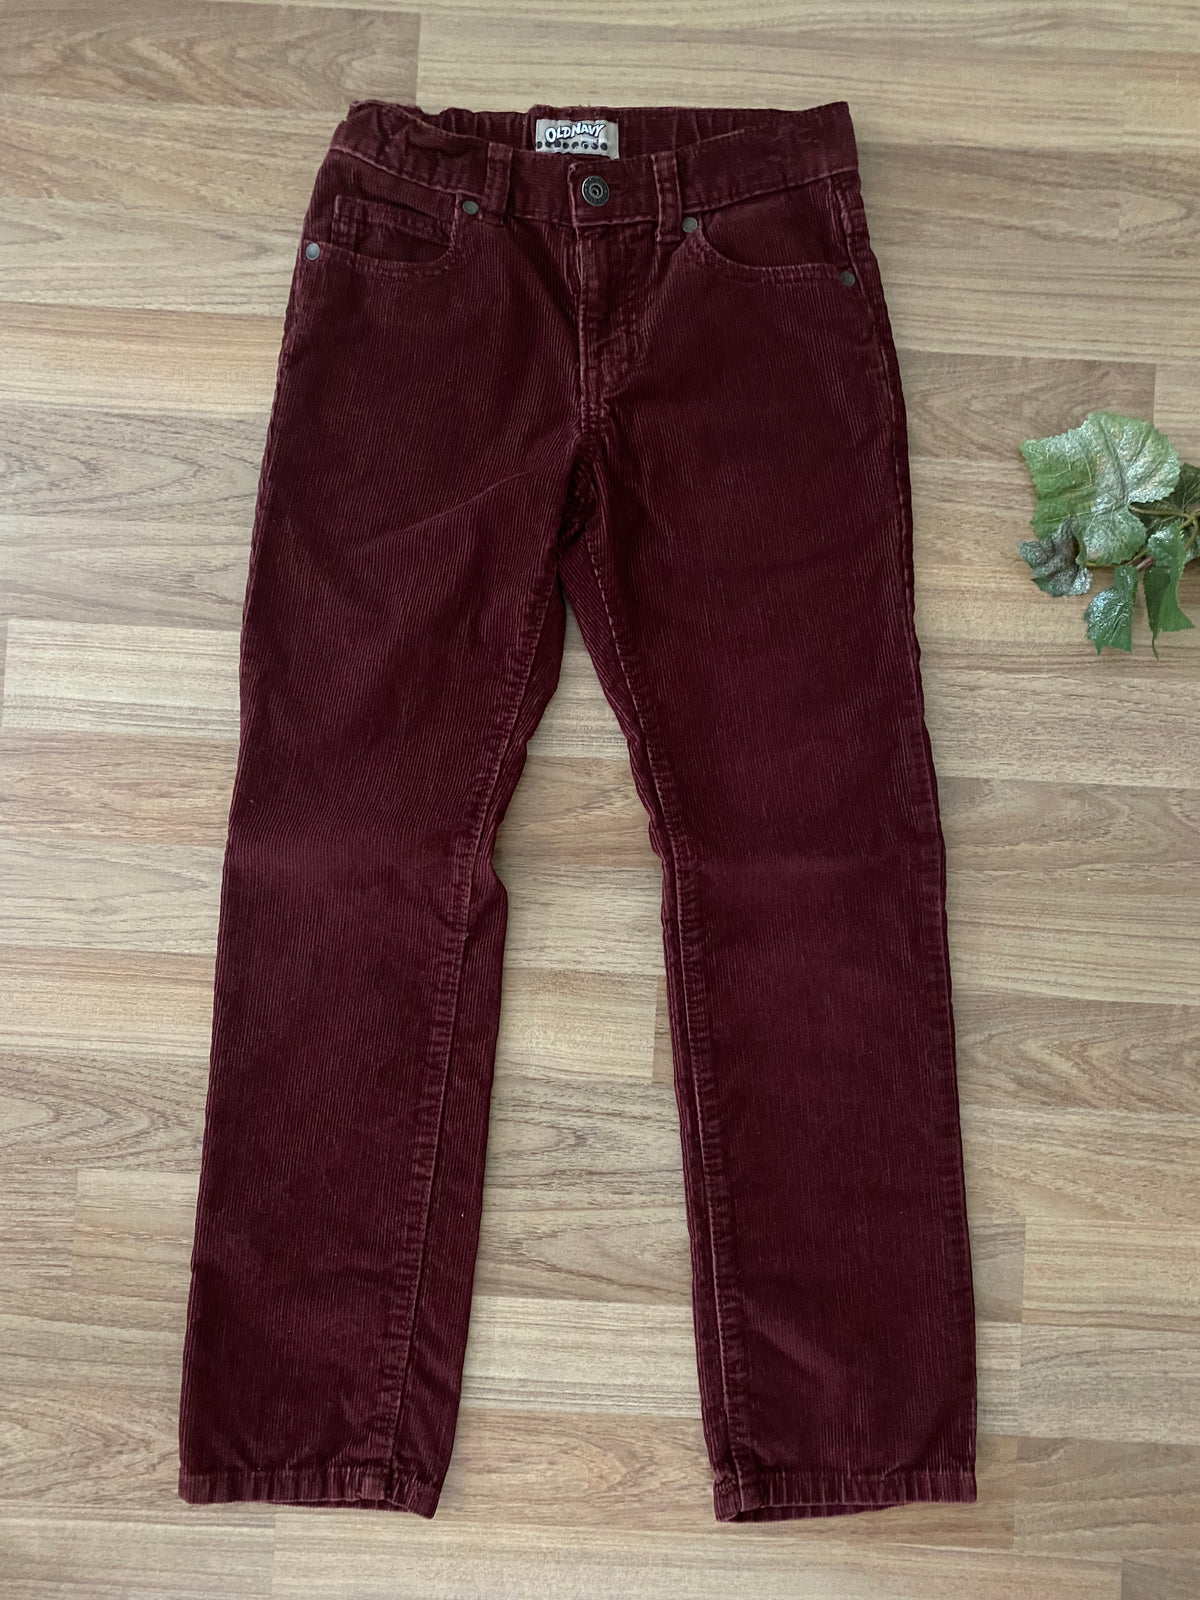 Corduroy Pants (Girls Size 8)